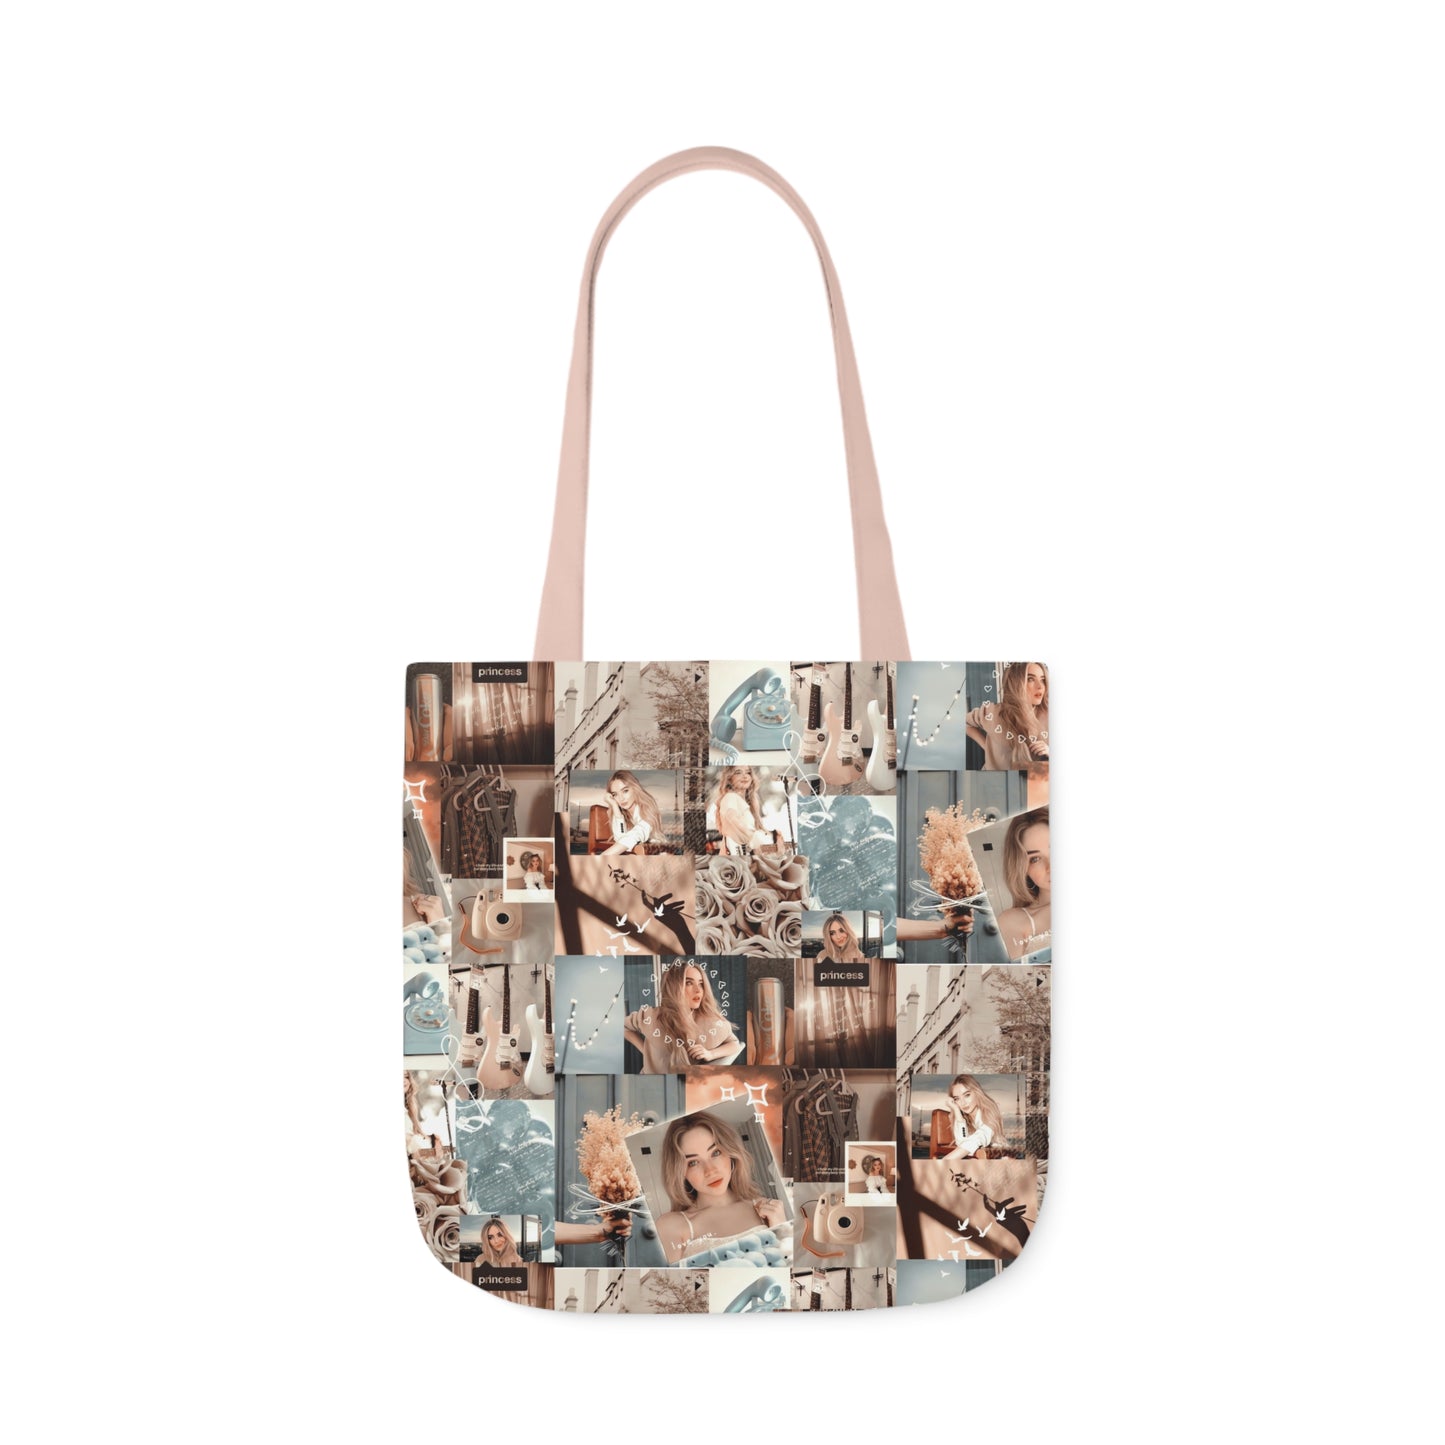 Sabrina Carpenter Peachy Princess Collage Polyester Canvas Tote Bag